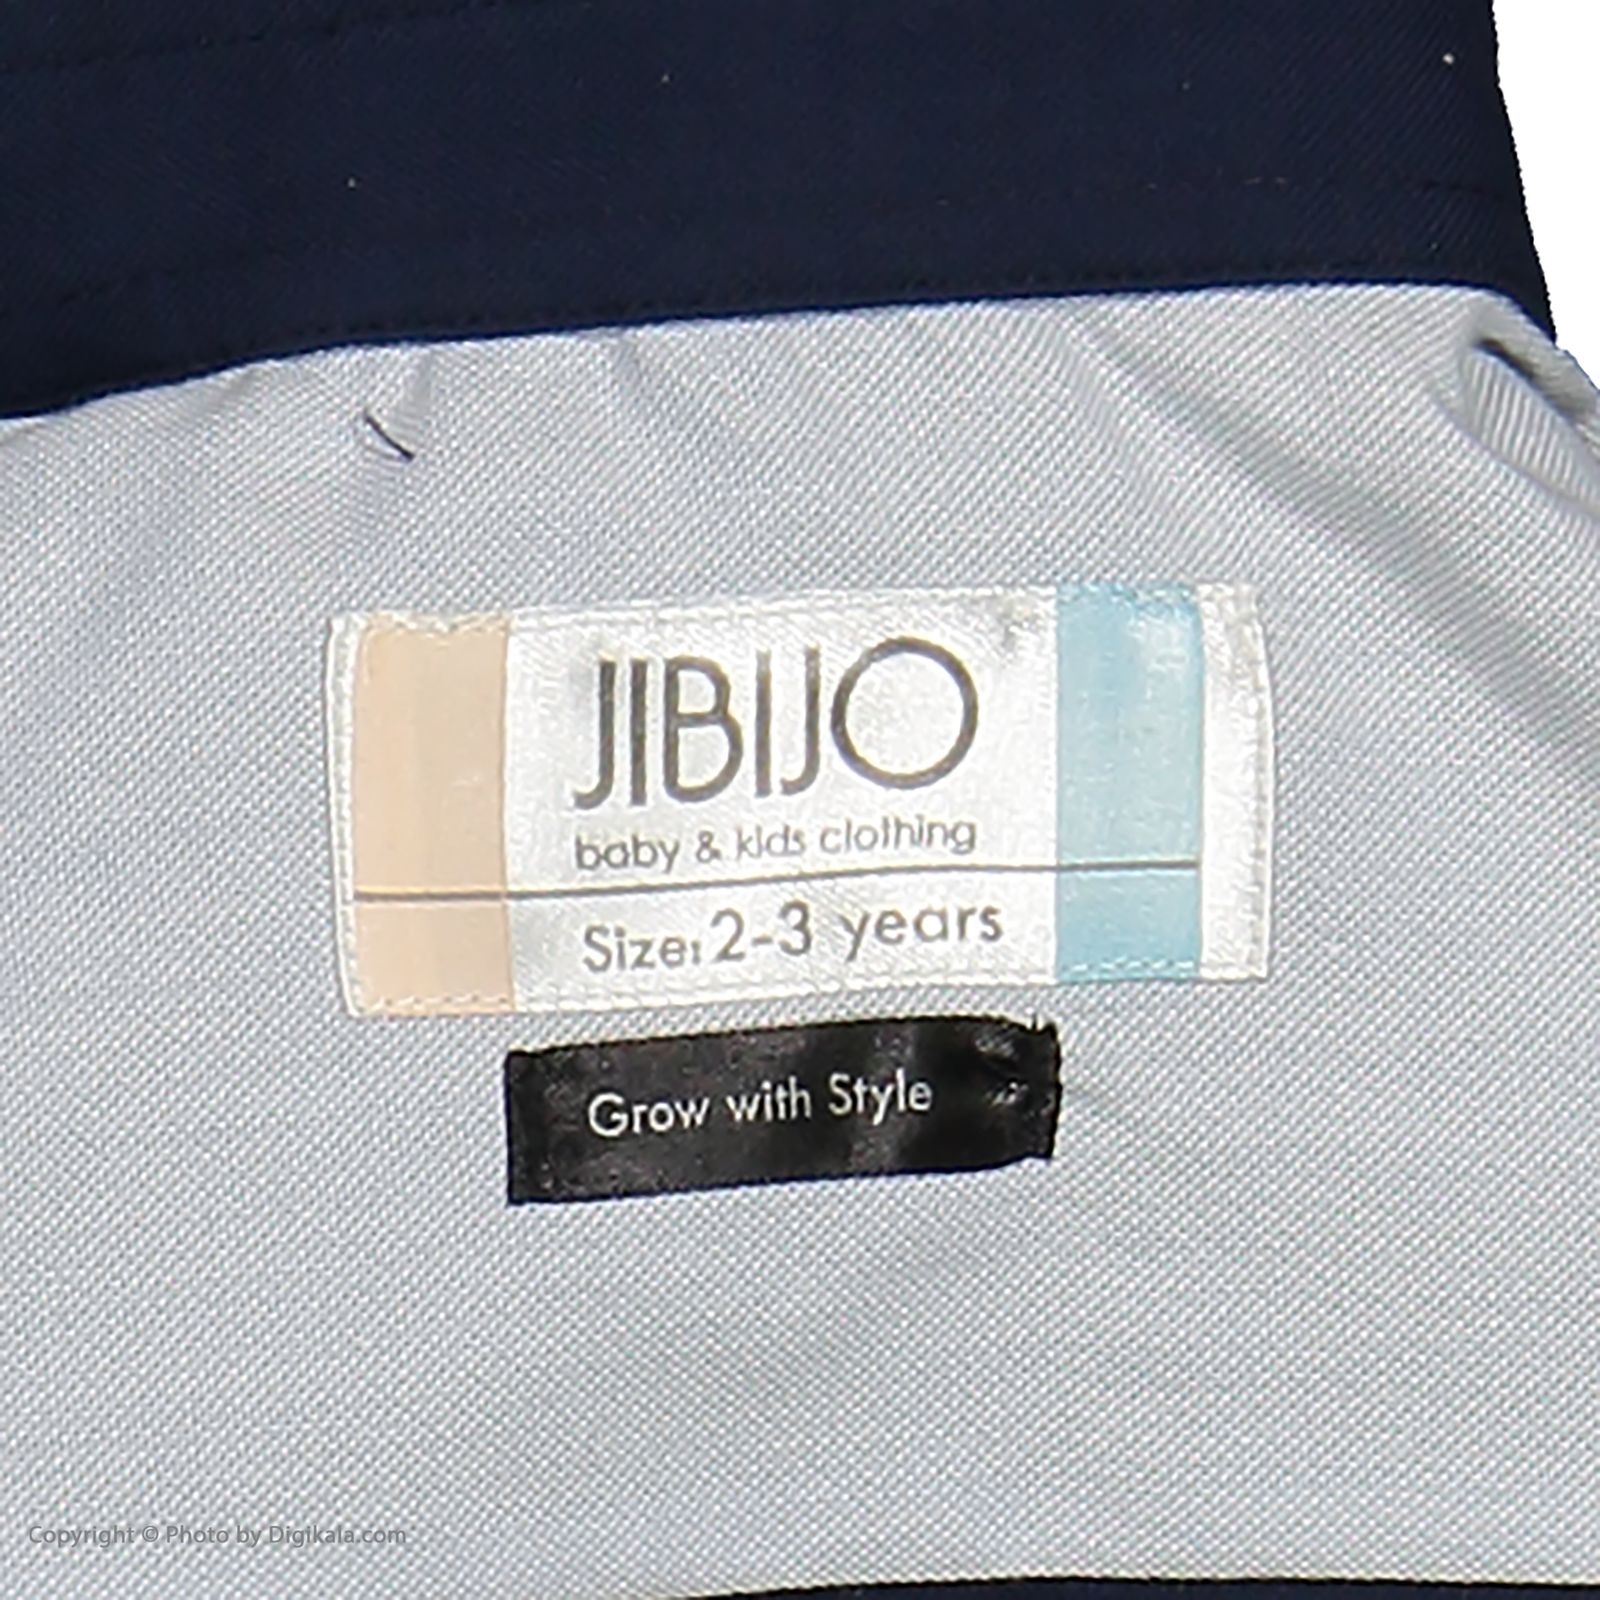 پیراهن پسرانه جی بی جو مدل 9903-3 -  - 4